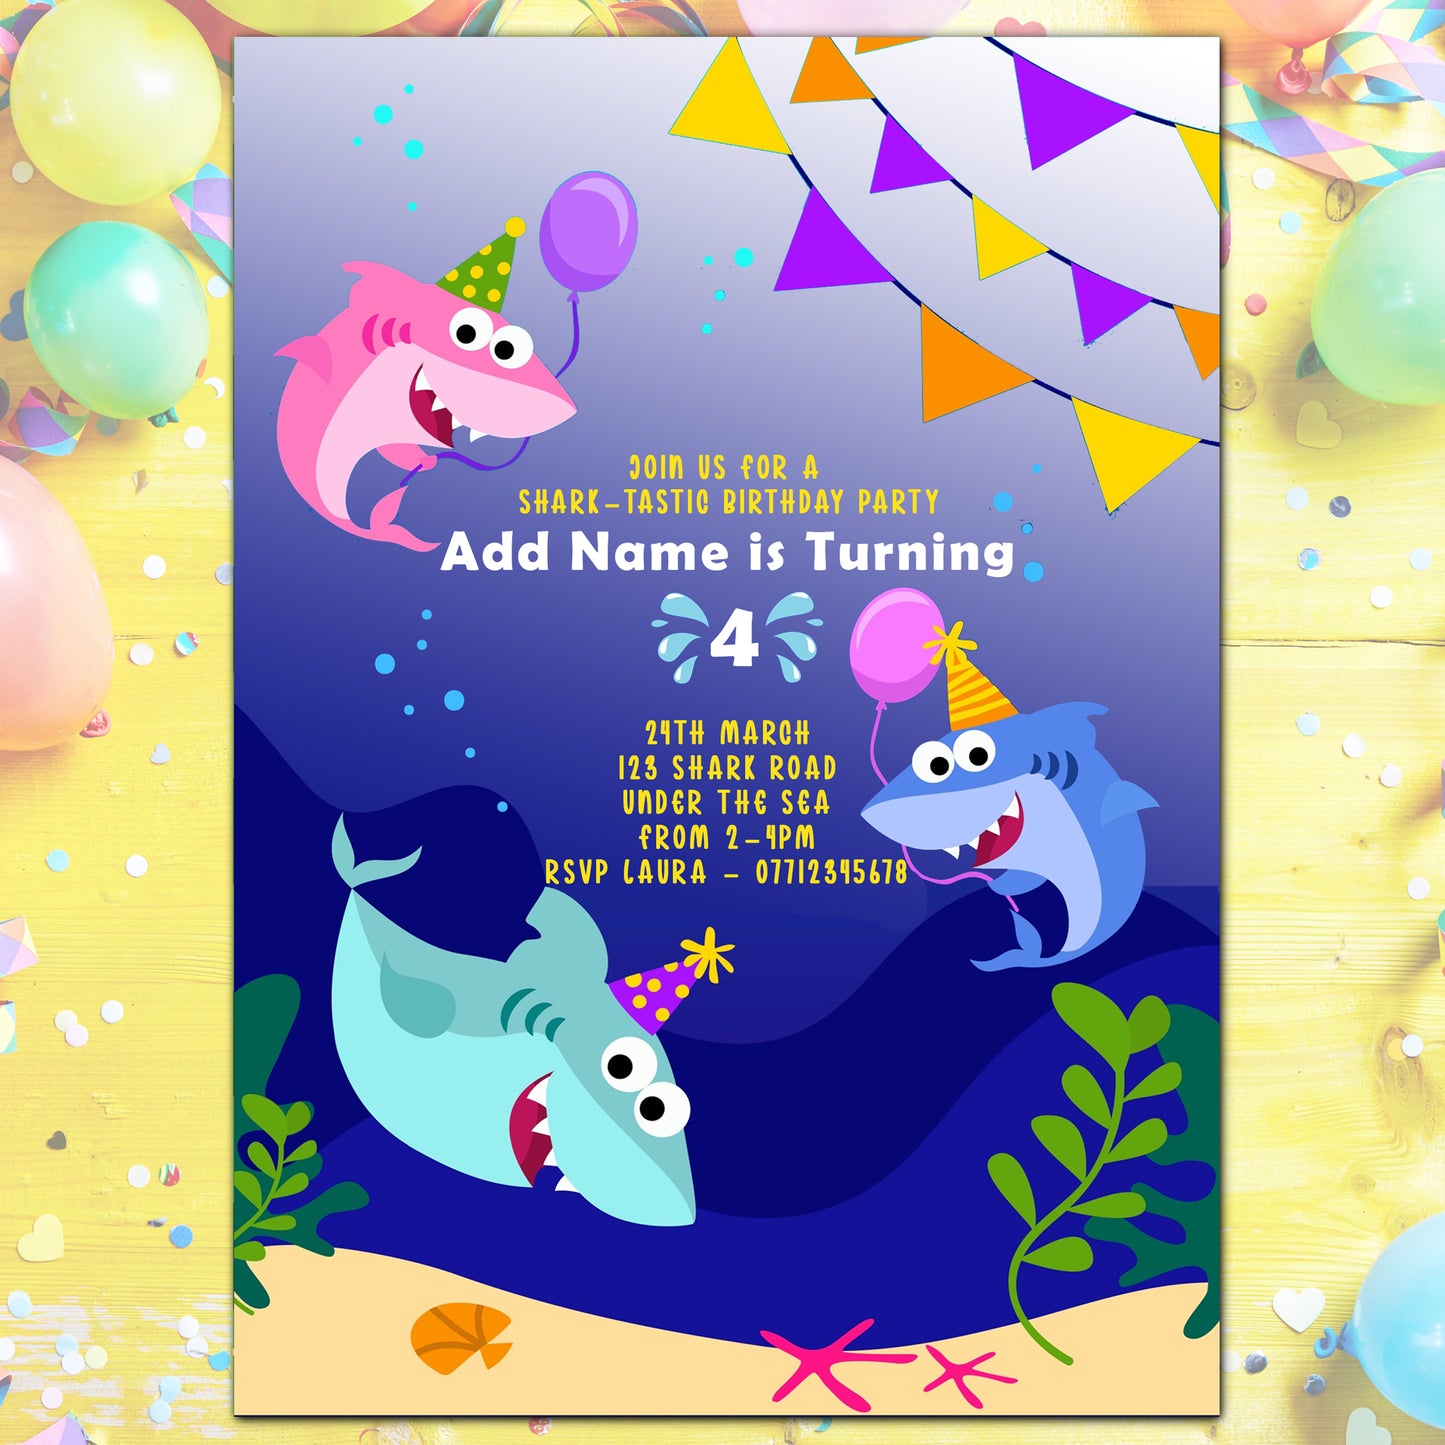 Shark-tastic Birthday Party Invitations